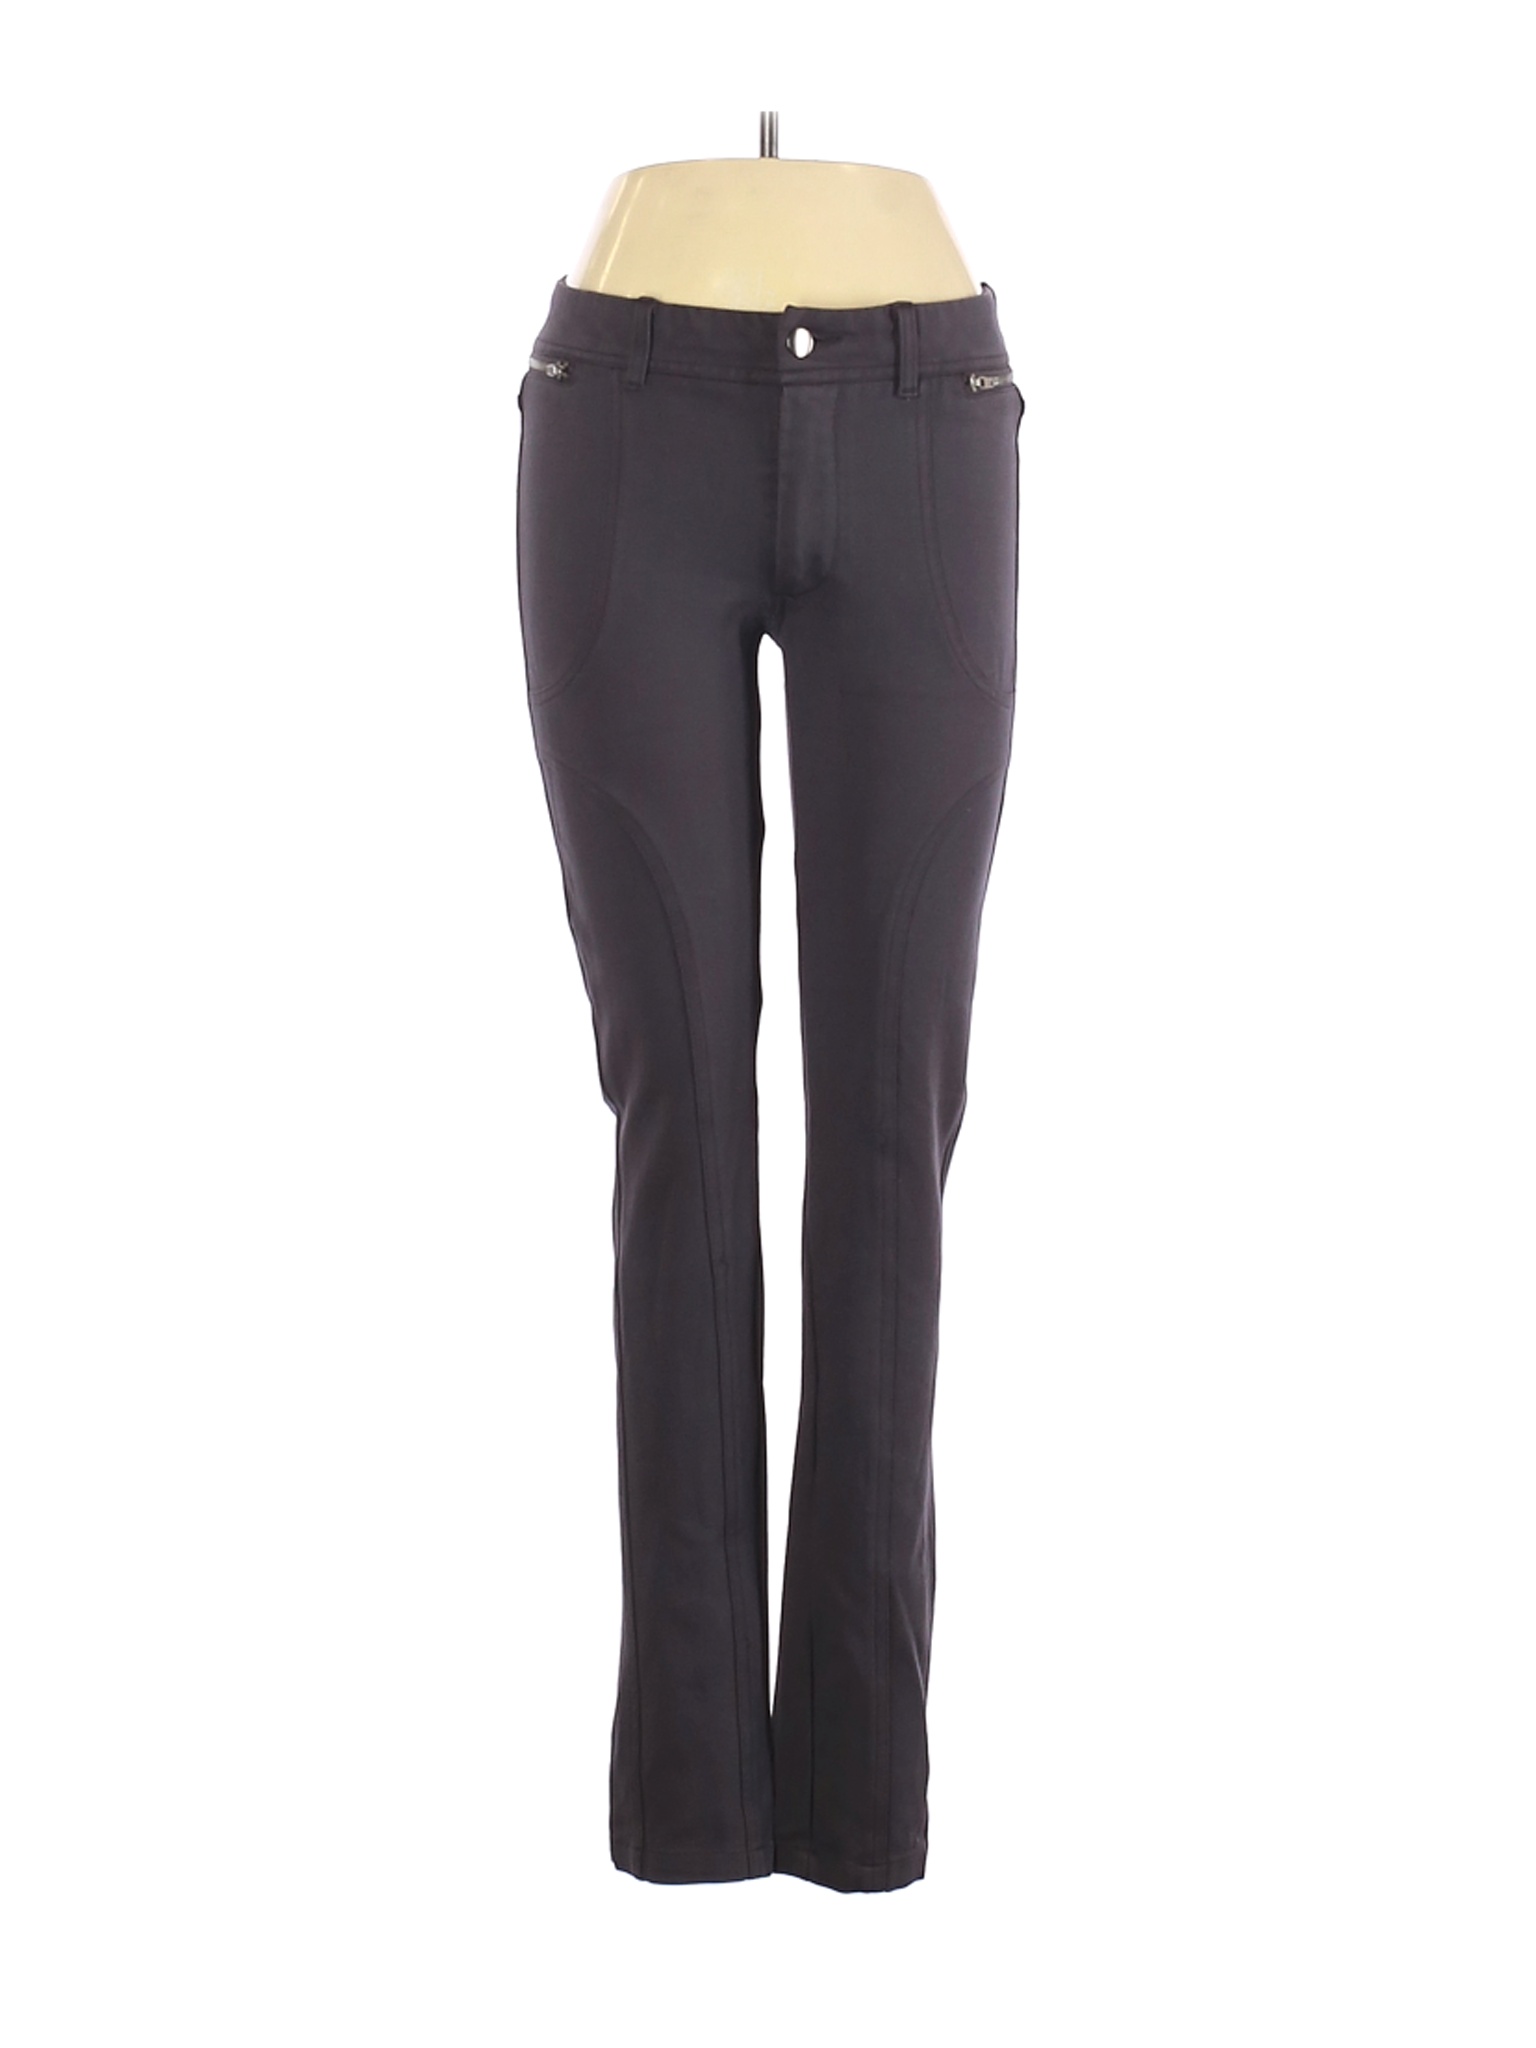 Paniz Women Gray Casual Pants 4 | eBay